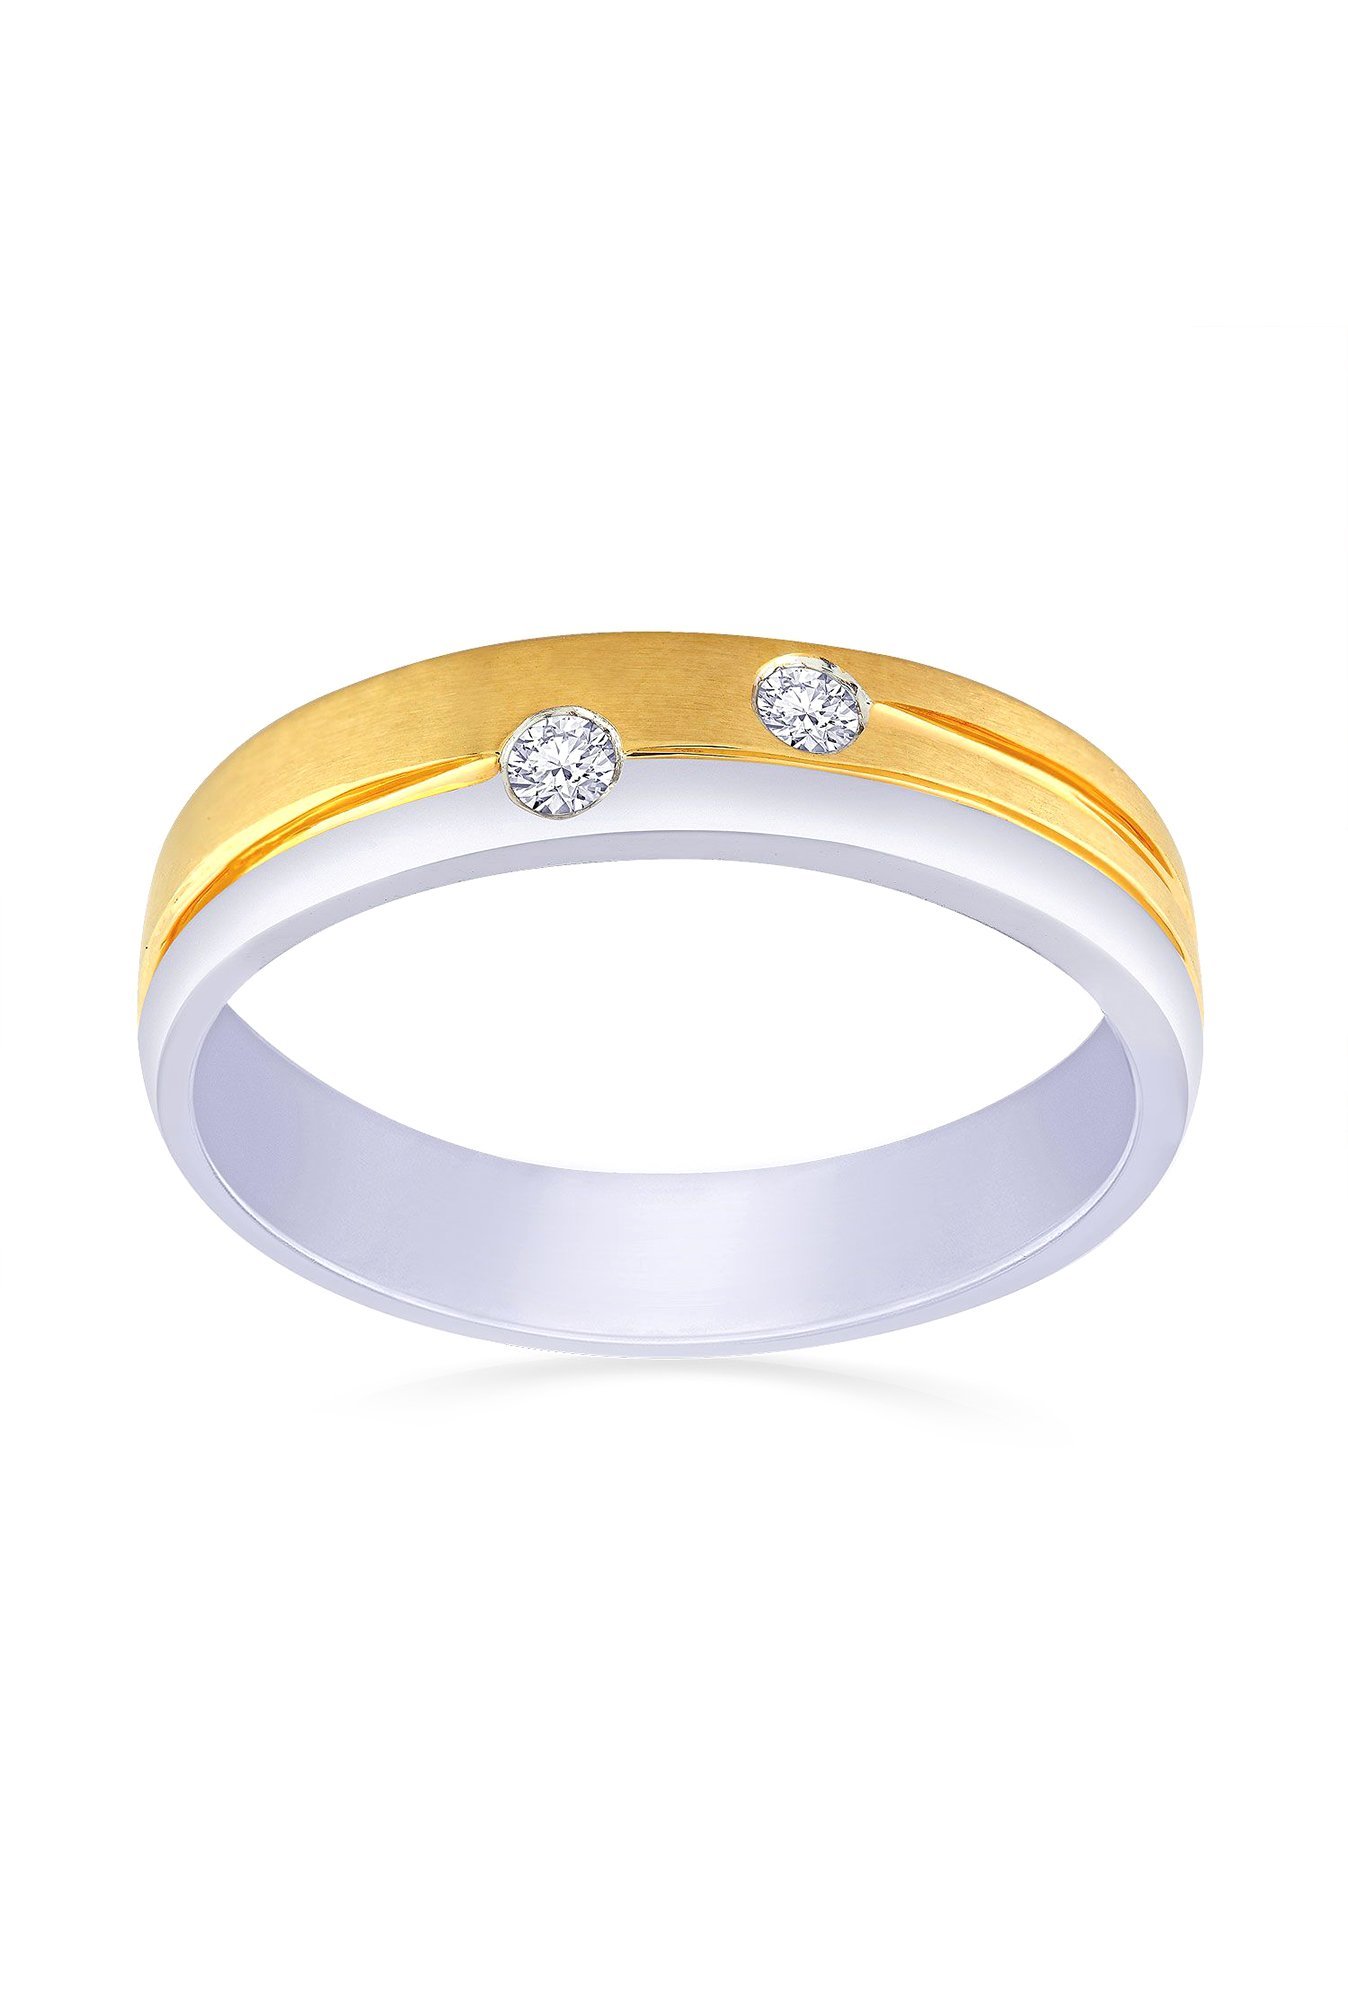 Malabar Gold and Diamonds 950 Platinum Platinum and Diamond Ring for Men :  Amazon.in: Jewellery